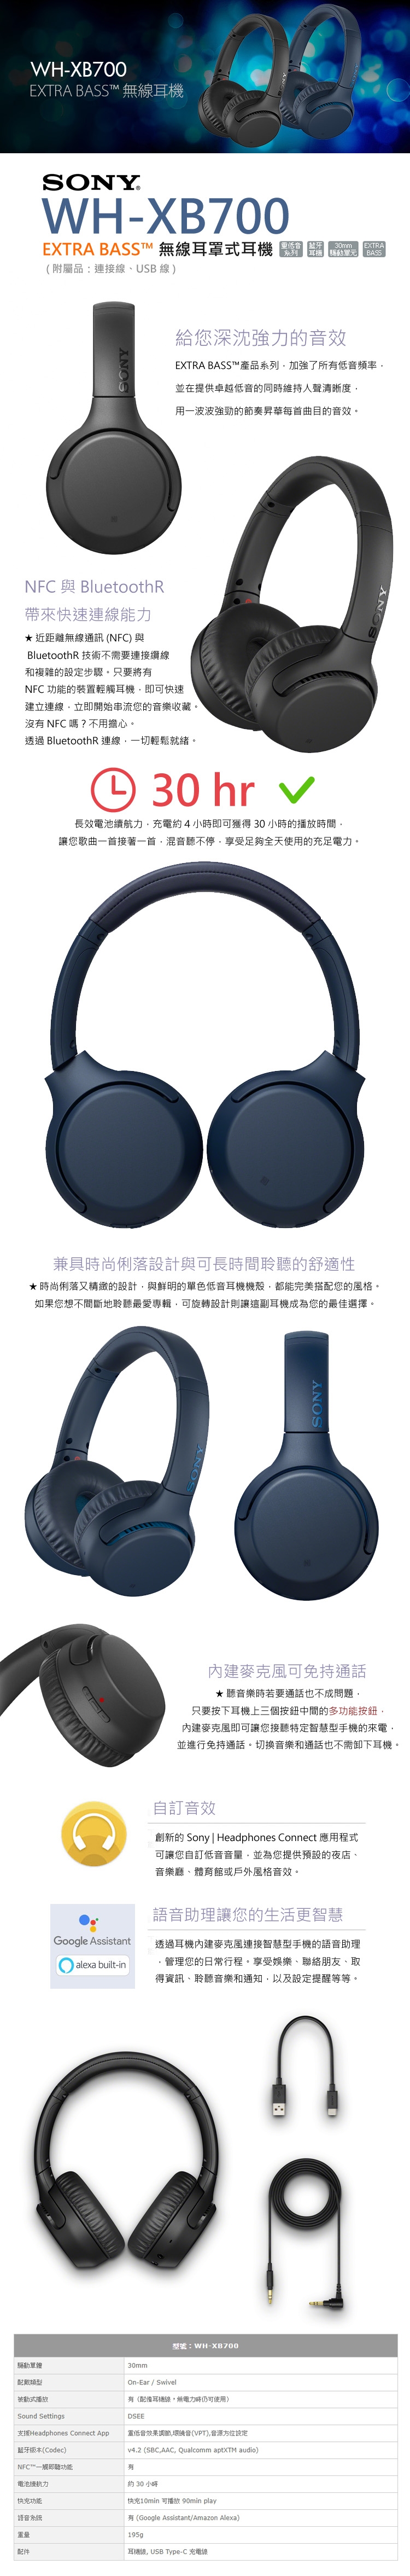 SONY WH-XB700EXTRA BASS 無線藍牙 耳罩式耳機